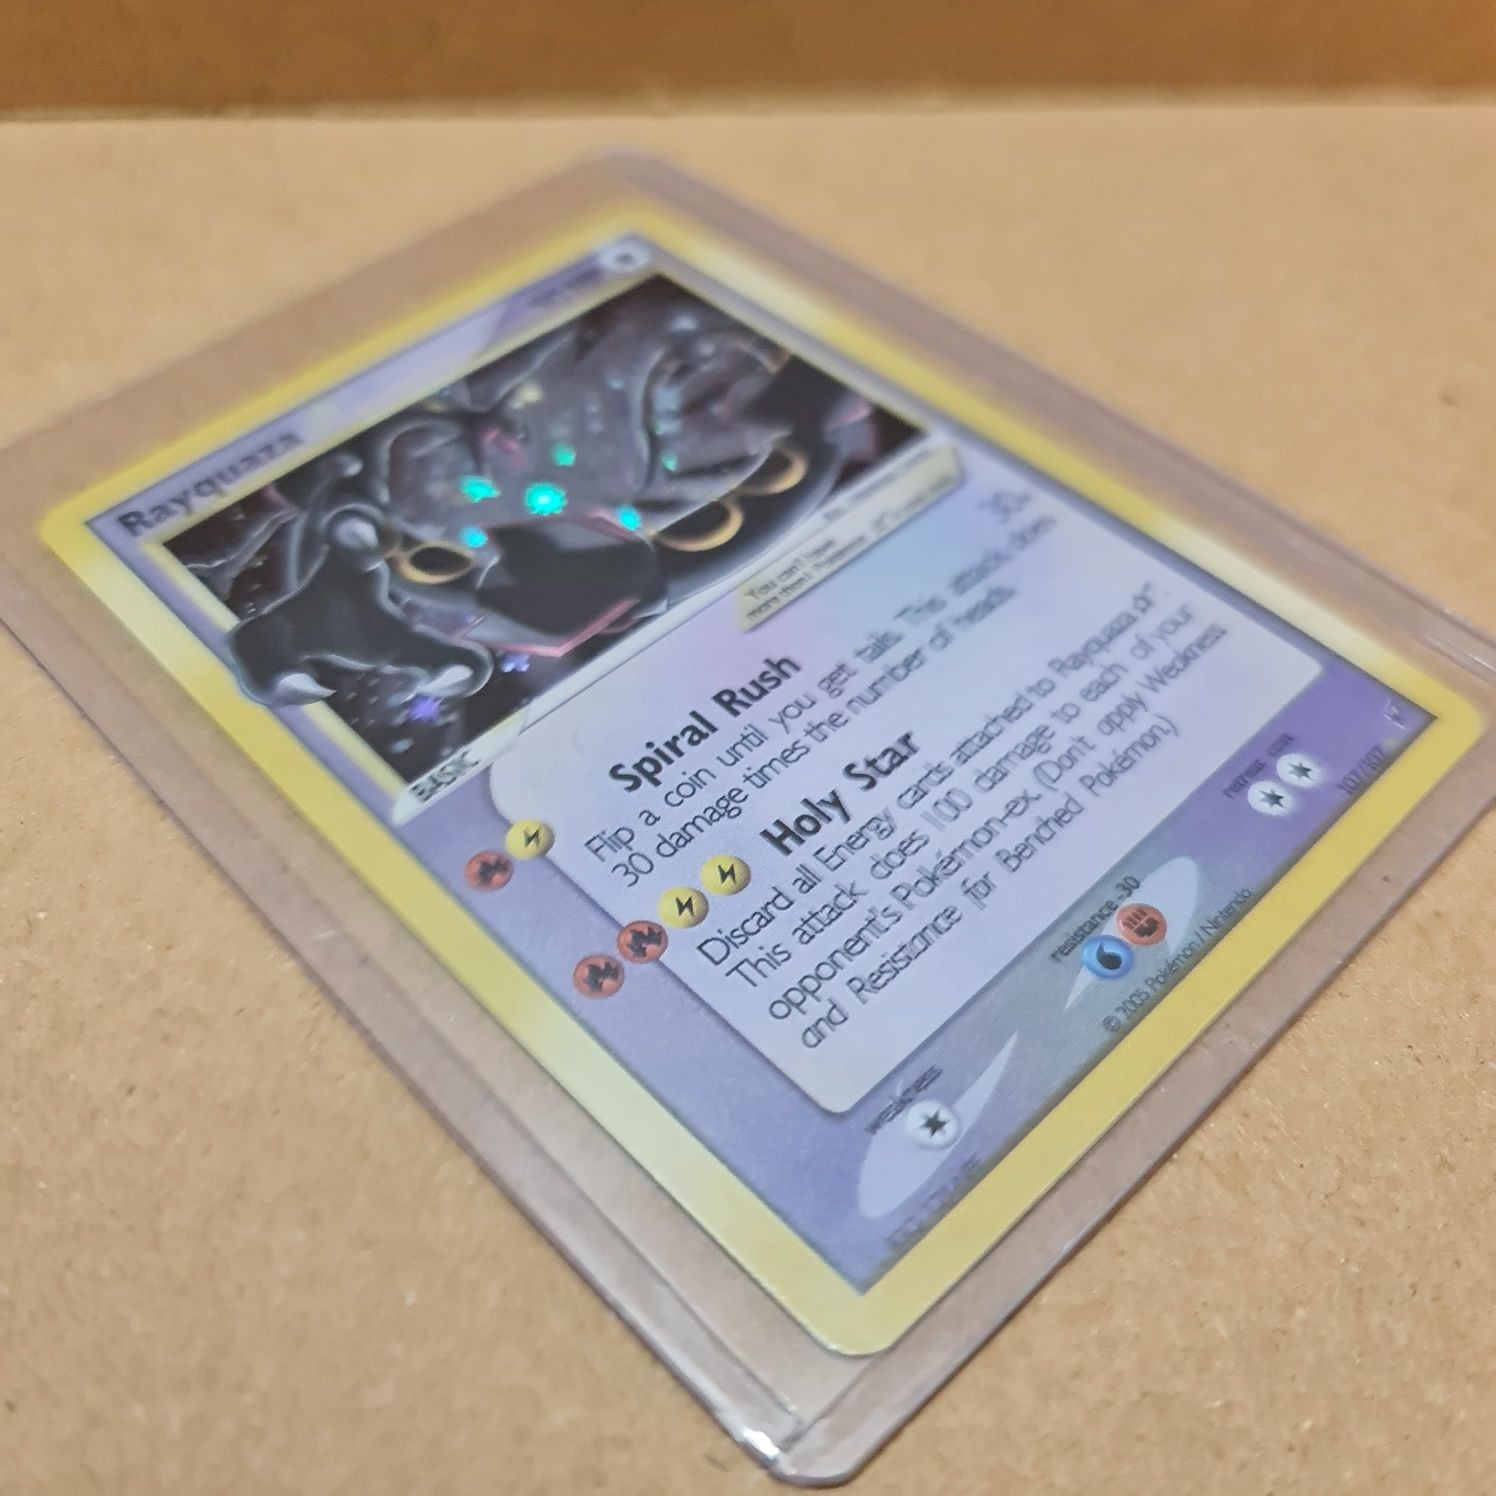 Carta Pokémon Rayquaza [Gold Star] 107/107 - Capa Protetora Incluída